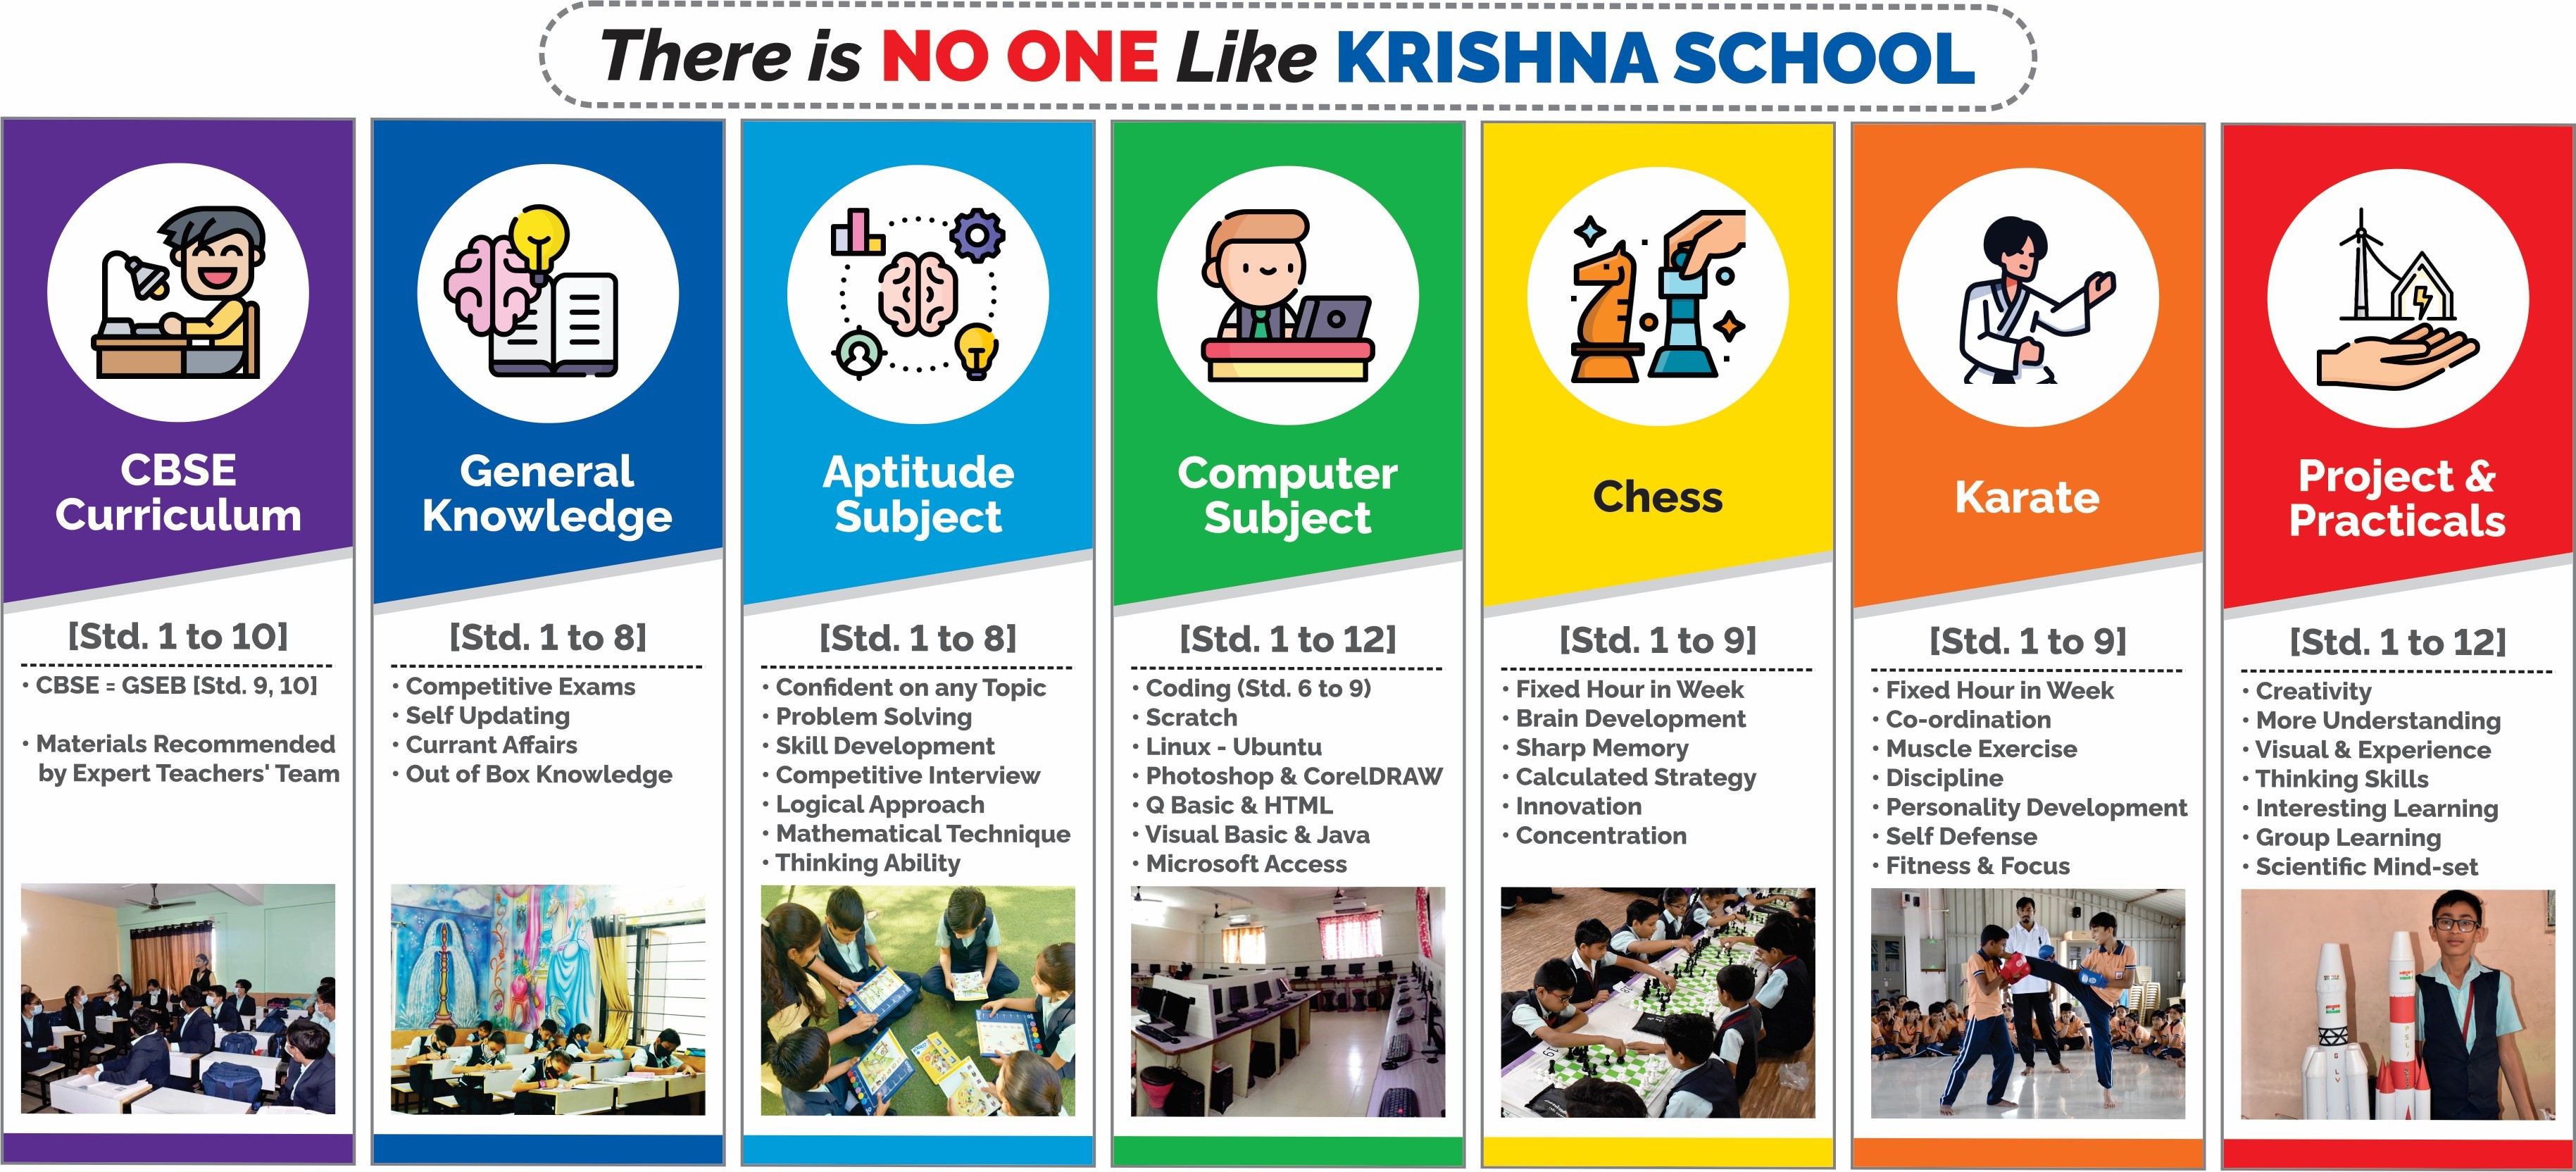 krishna school information jamnagar